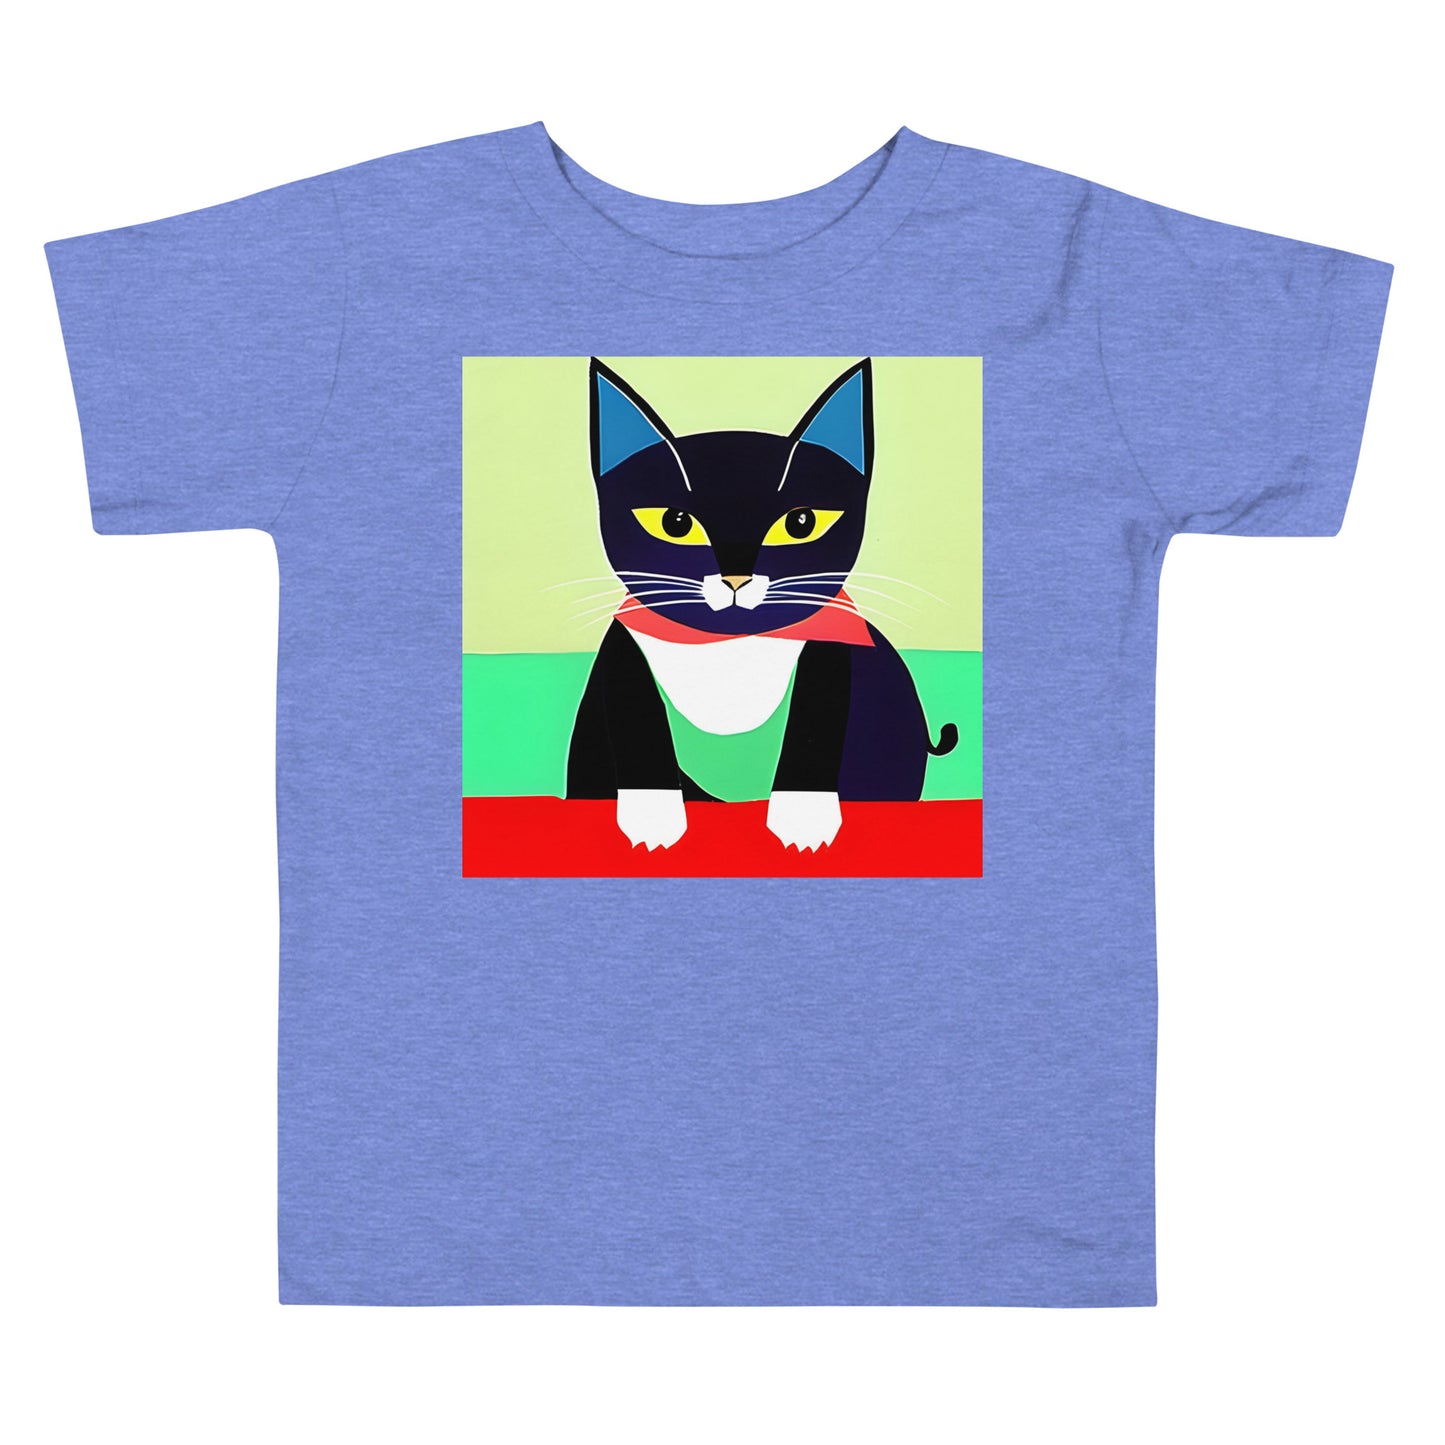 Purrfect Toddler's T-Shirt - 014